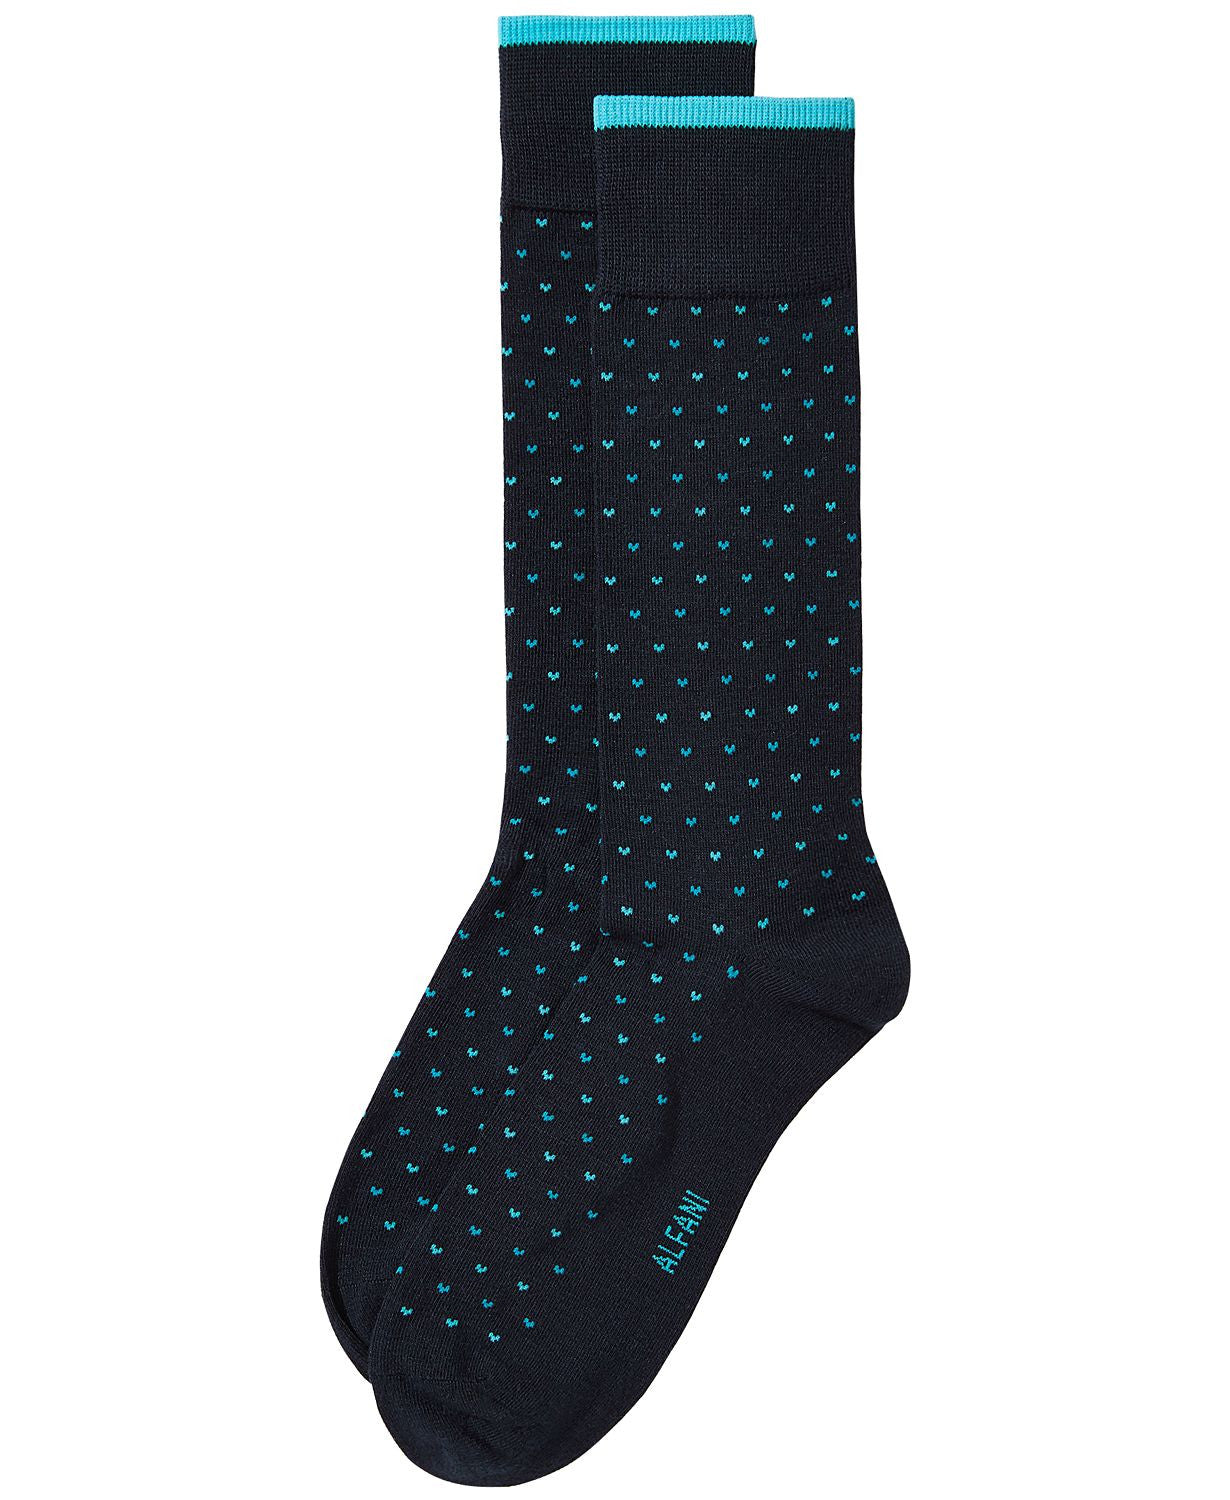 Alfani Patterned Socks Navy Blue